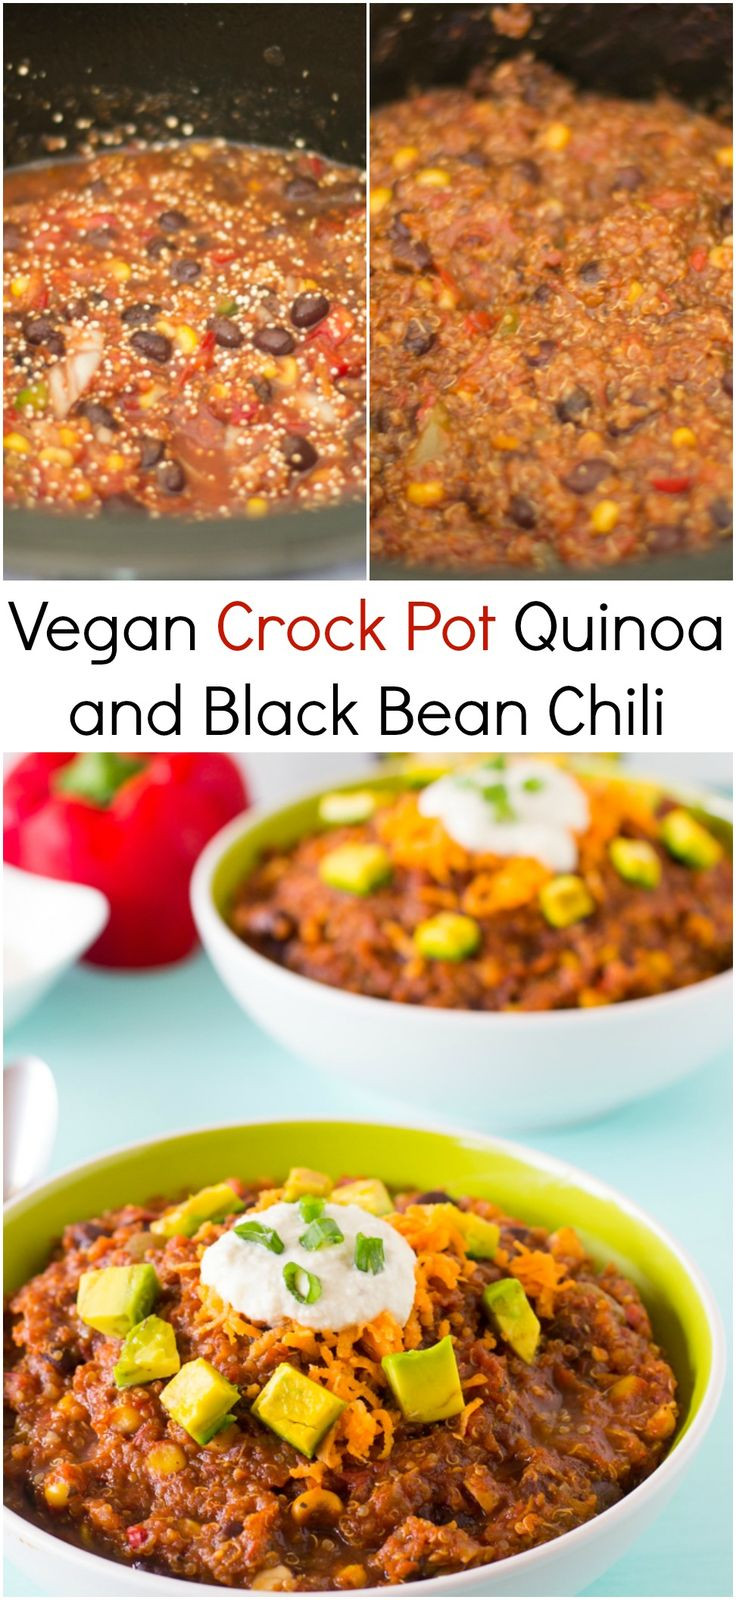 Healthy Vegetarian Crockpot Recipes
 17 Best images about Vegan Crockpot Recipes on Pinterest